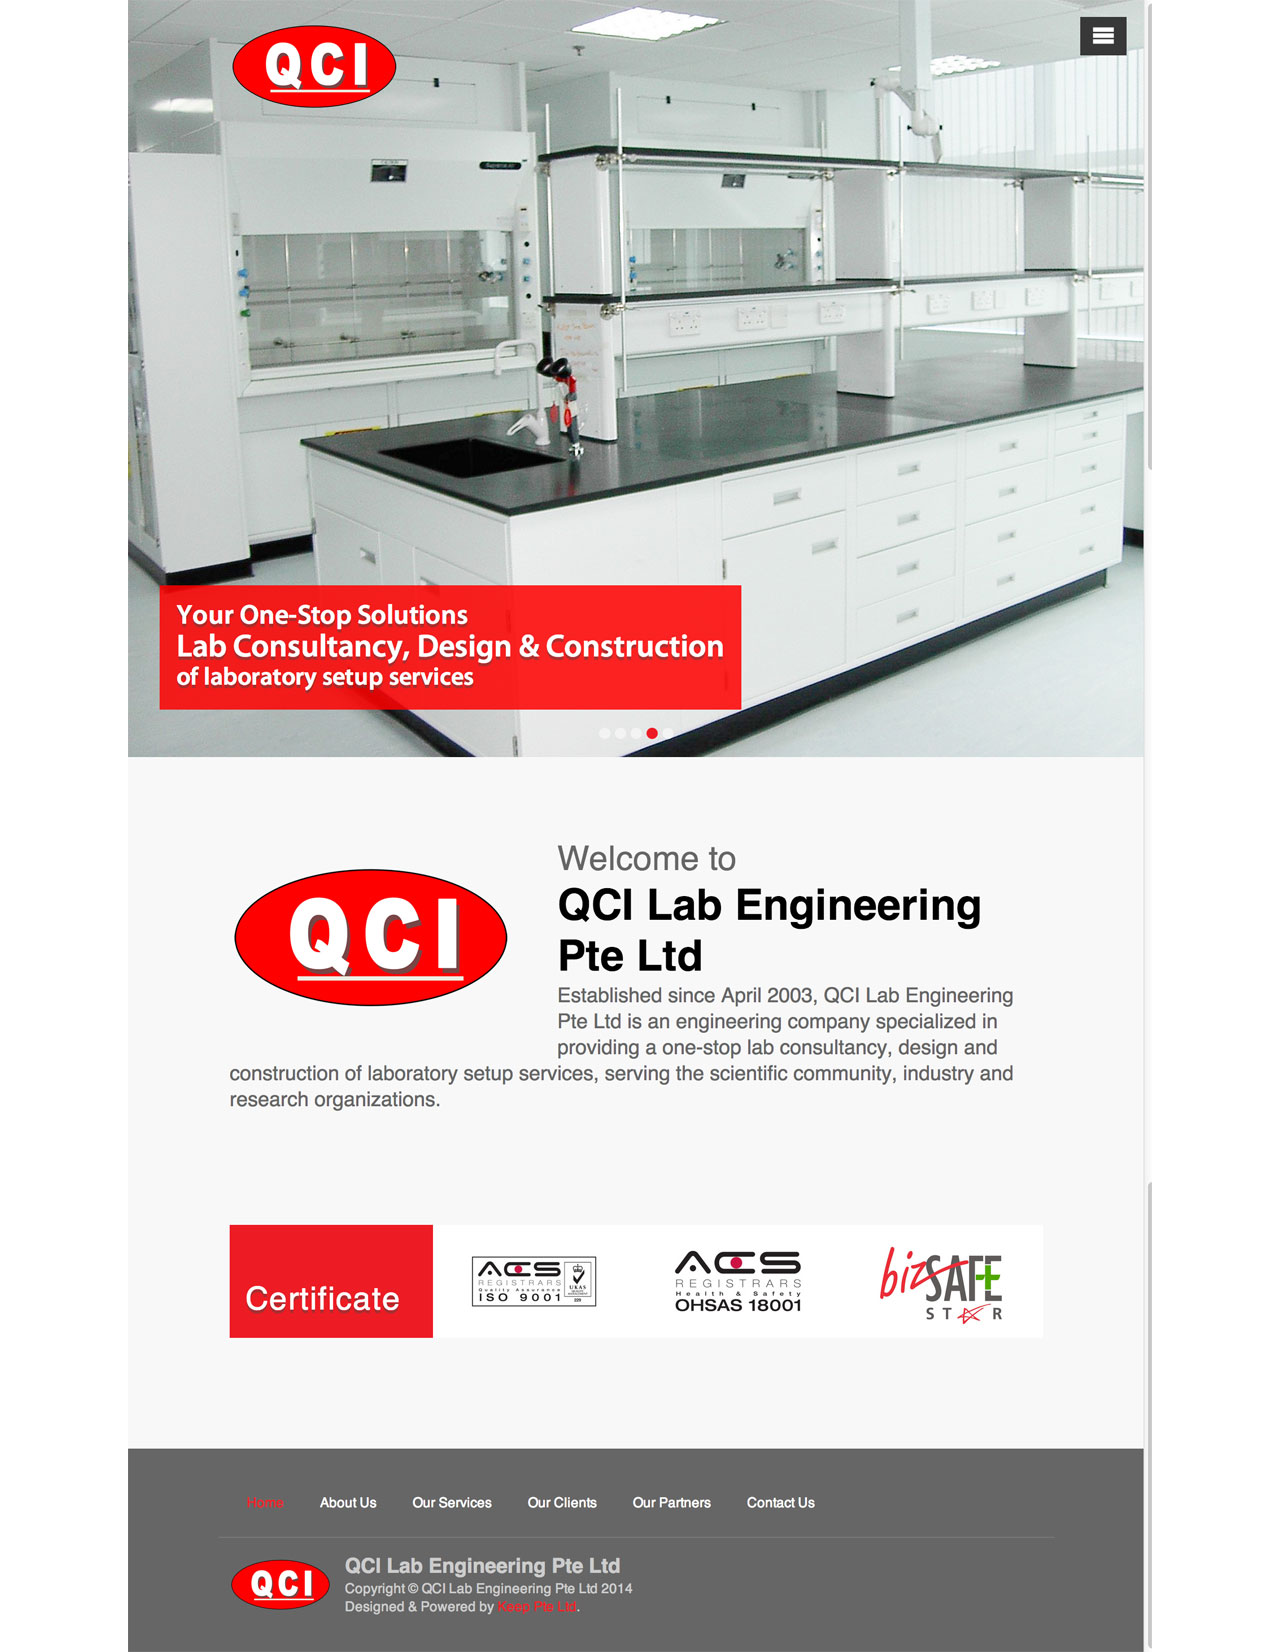 Qci Lab Engineering Pte. Ltd. website homepage on tablet